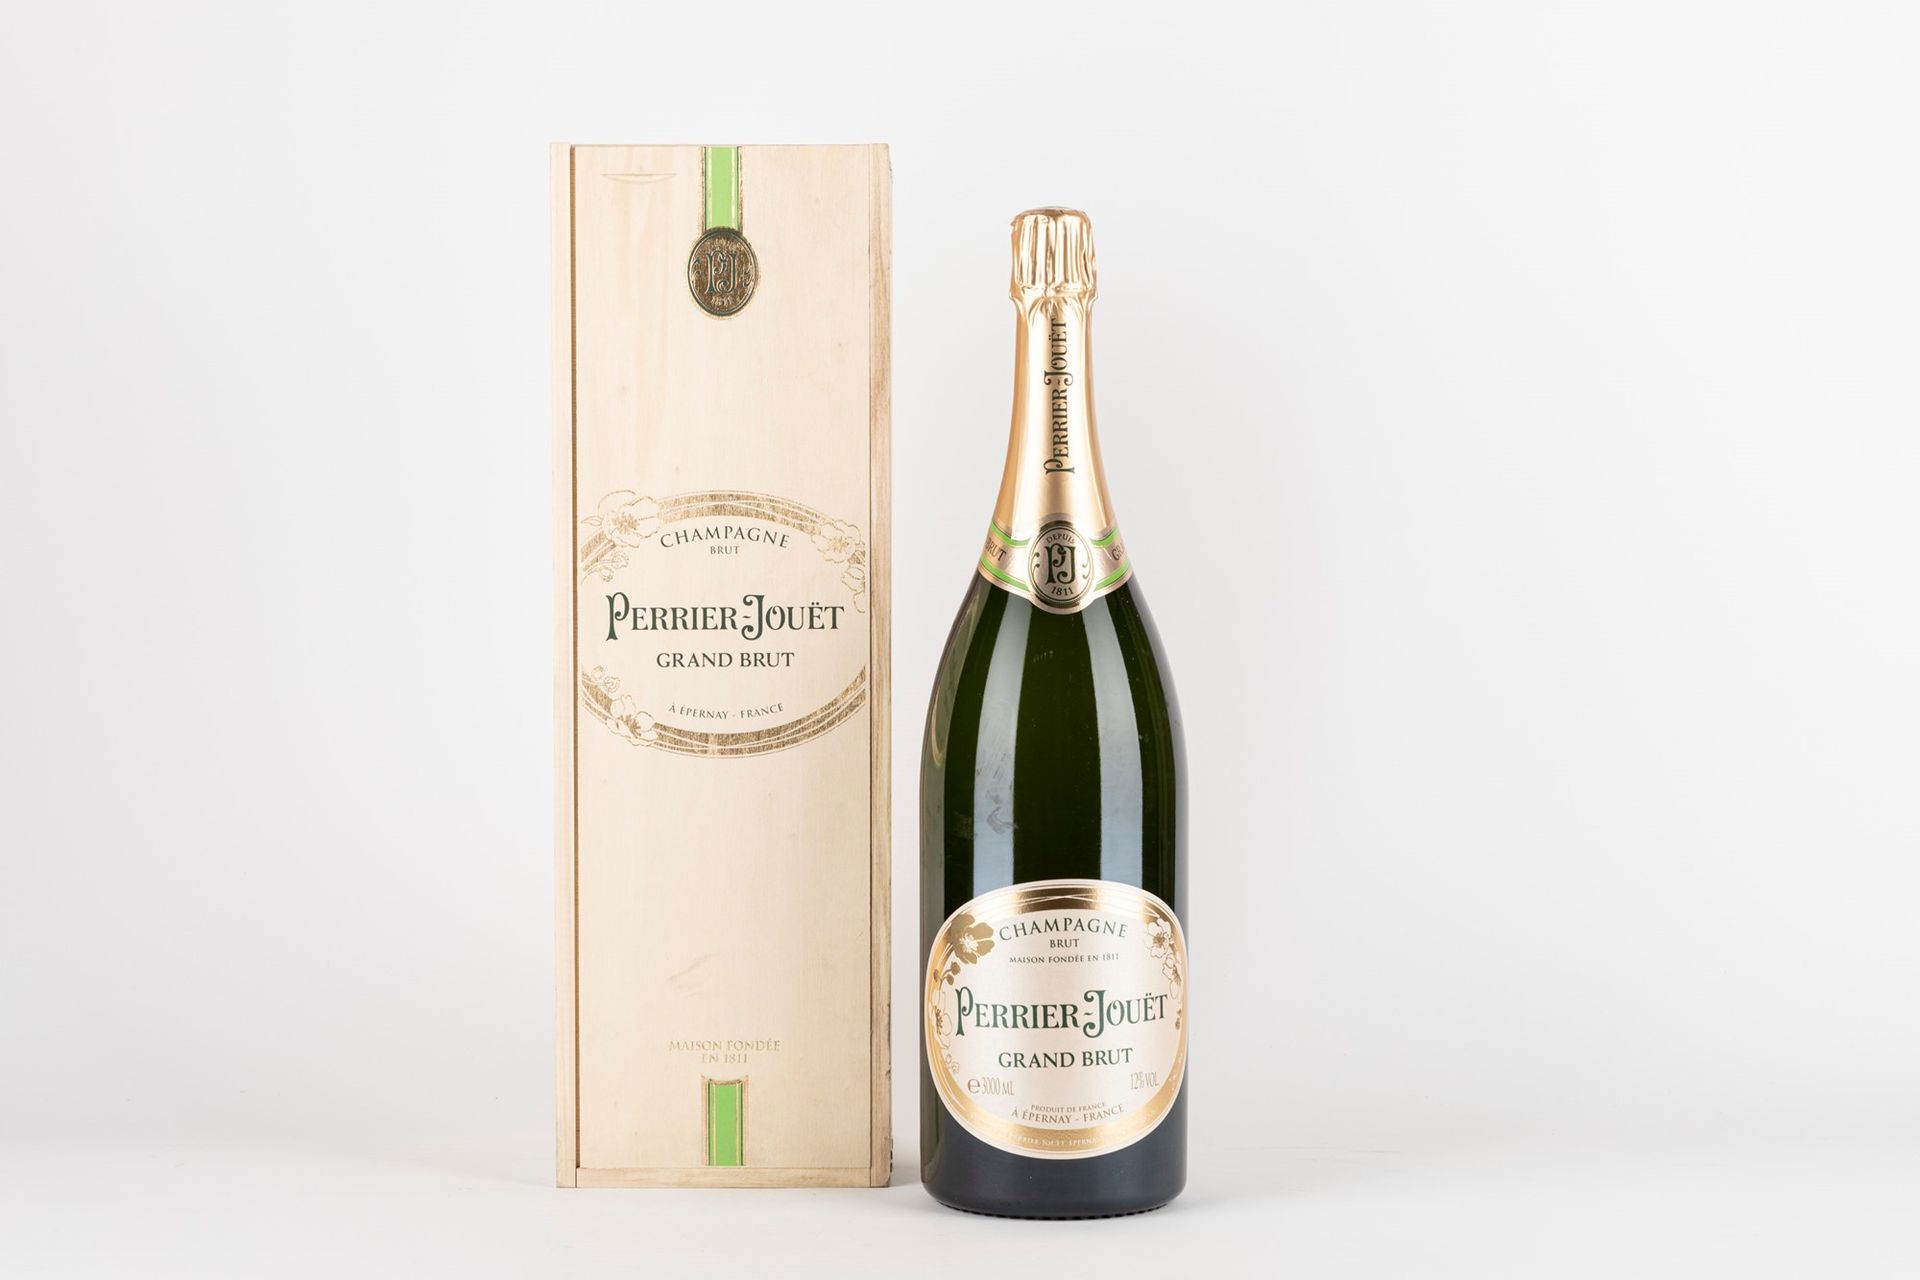 Null Frankreich - Champagner / Perrier Jouet Grand Brut 3 Liter 

1 Jeroboam
OWC